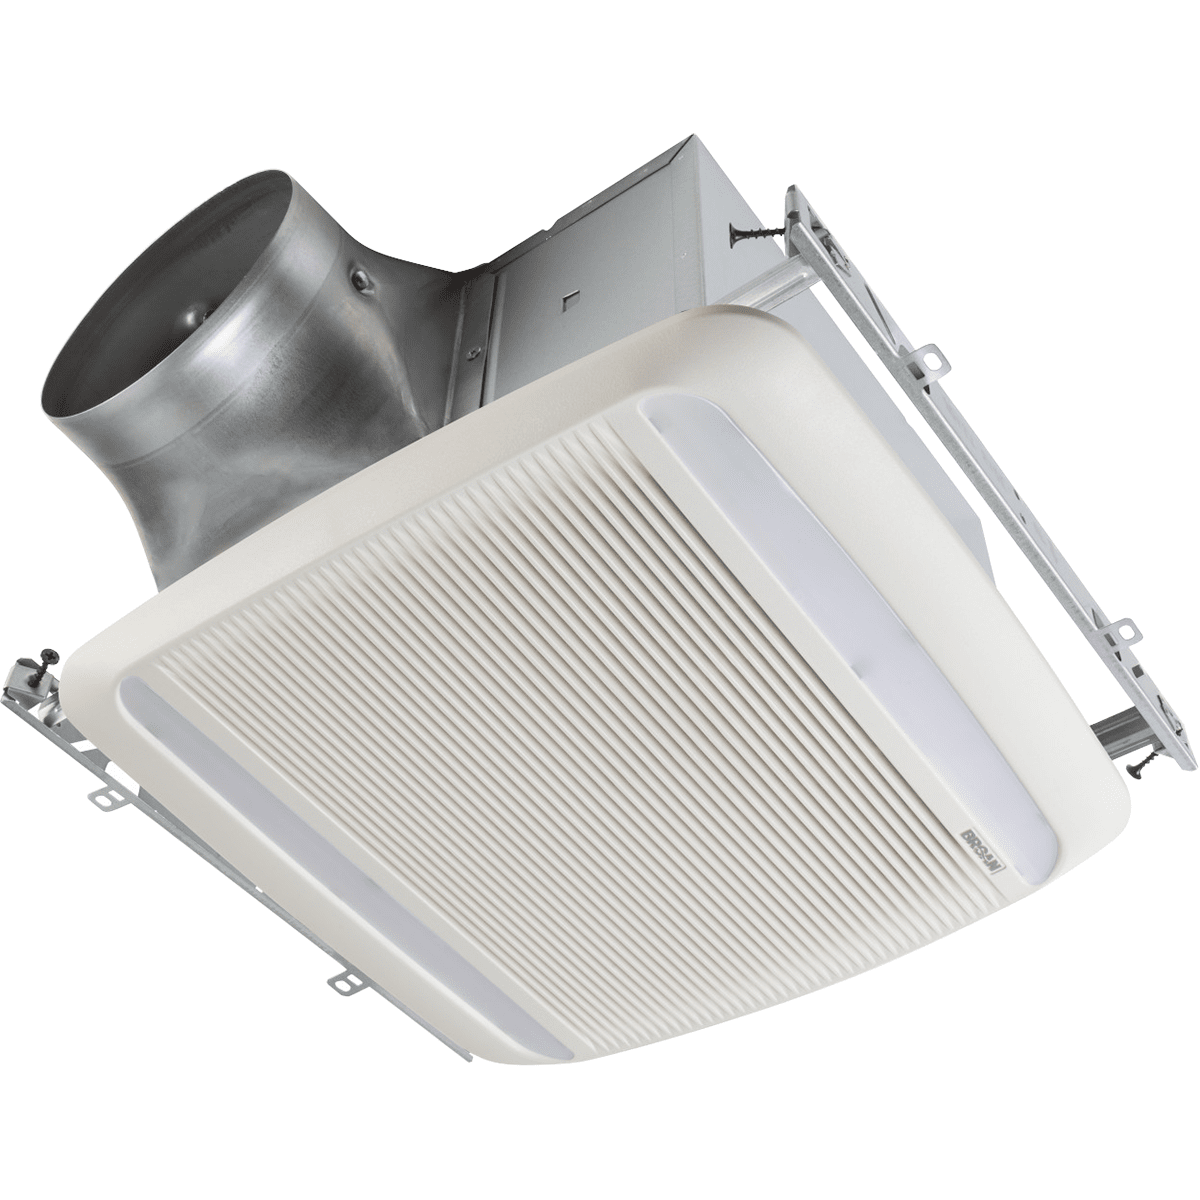 Broan RB Ultra Pro Series Energy Star Bathroom Exhaust Fan - 110 CFM w/ LED Light